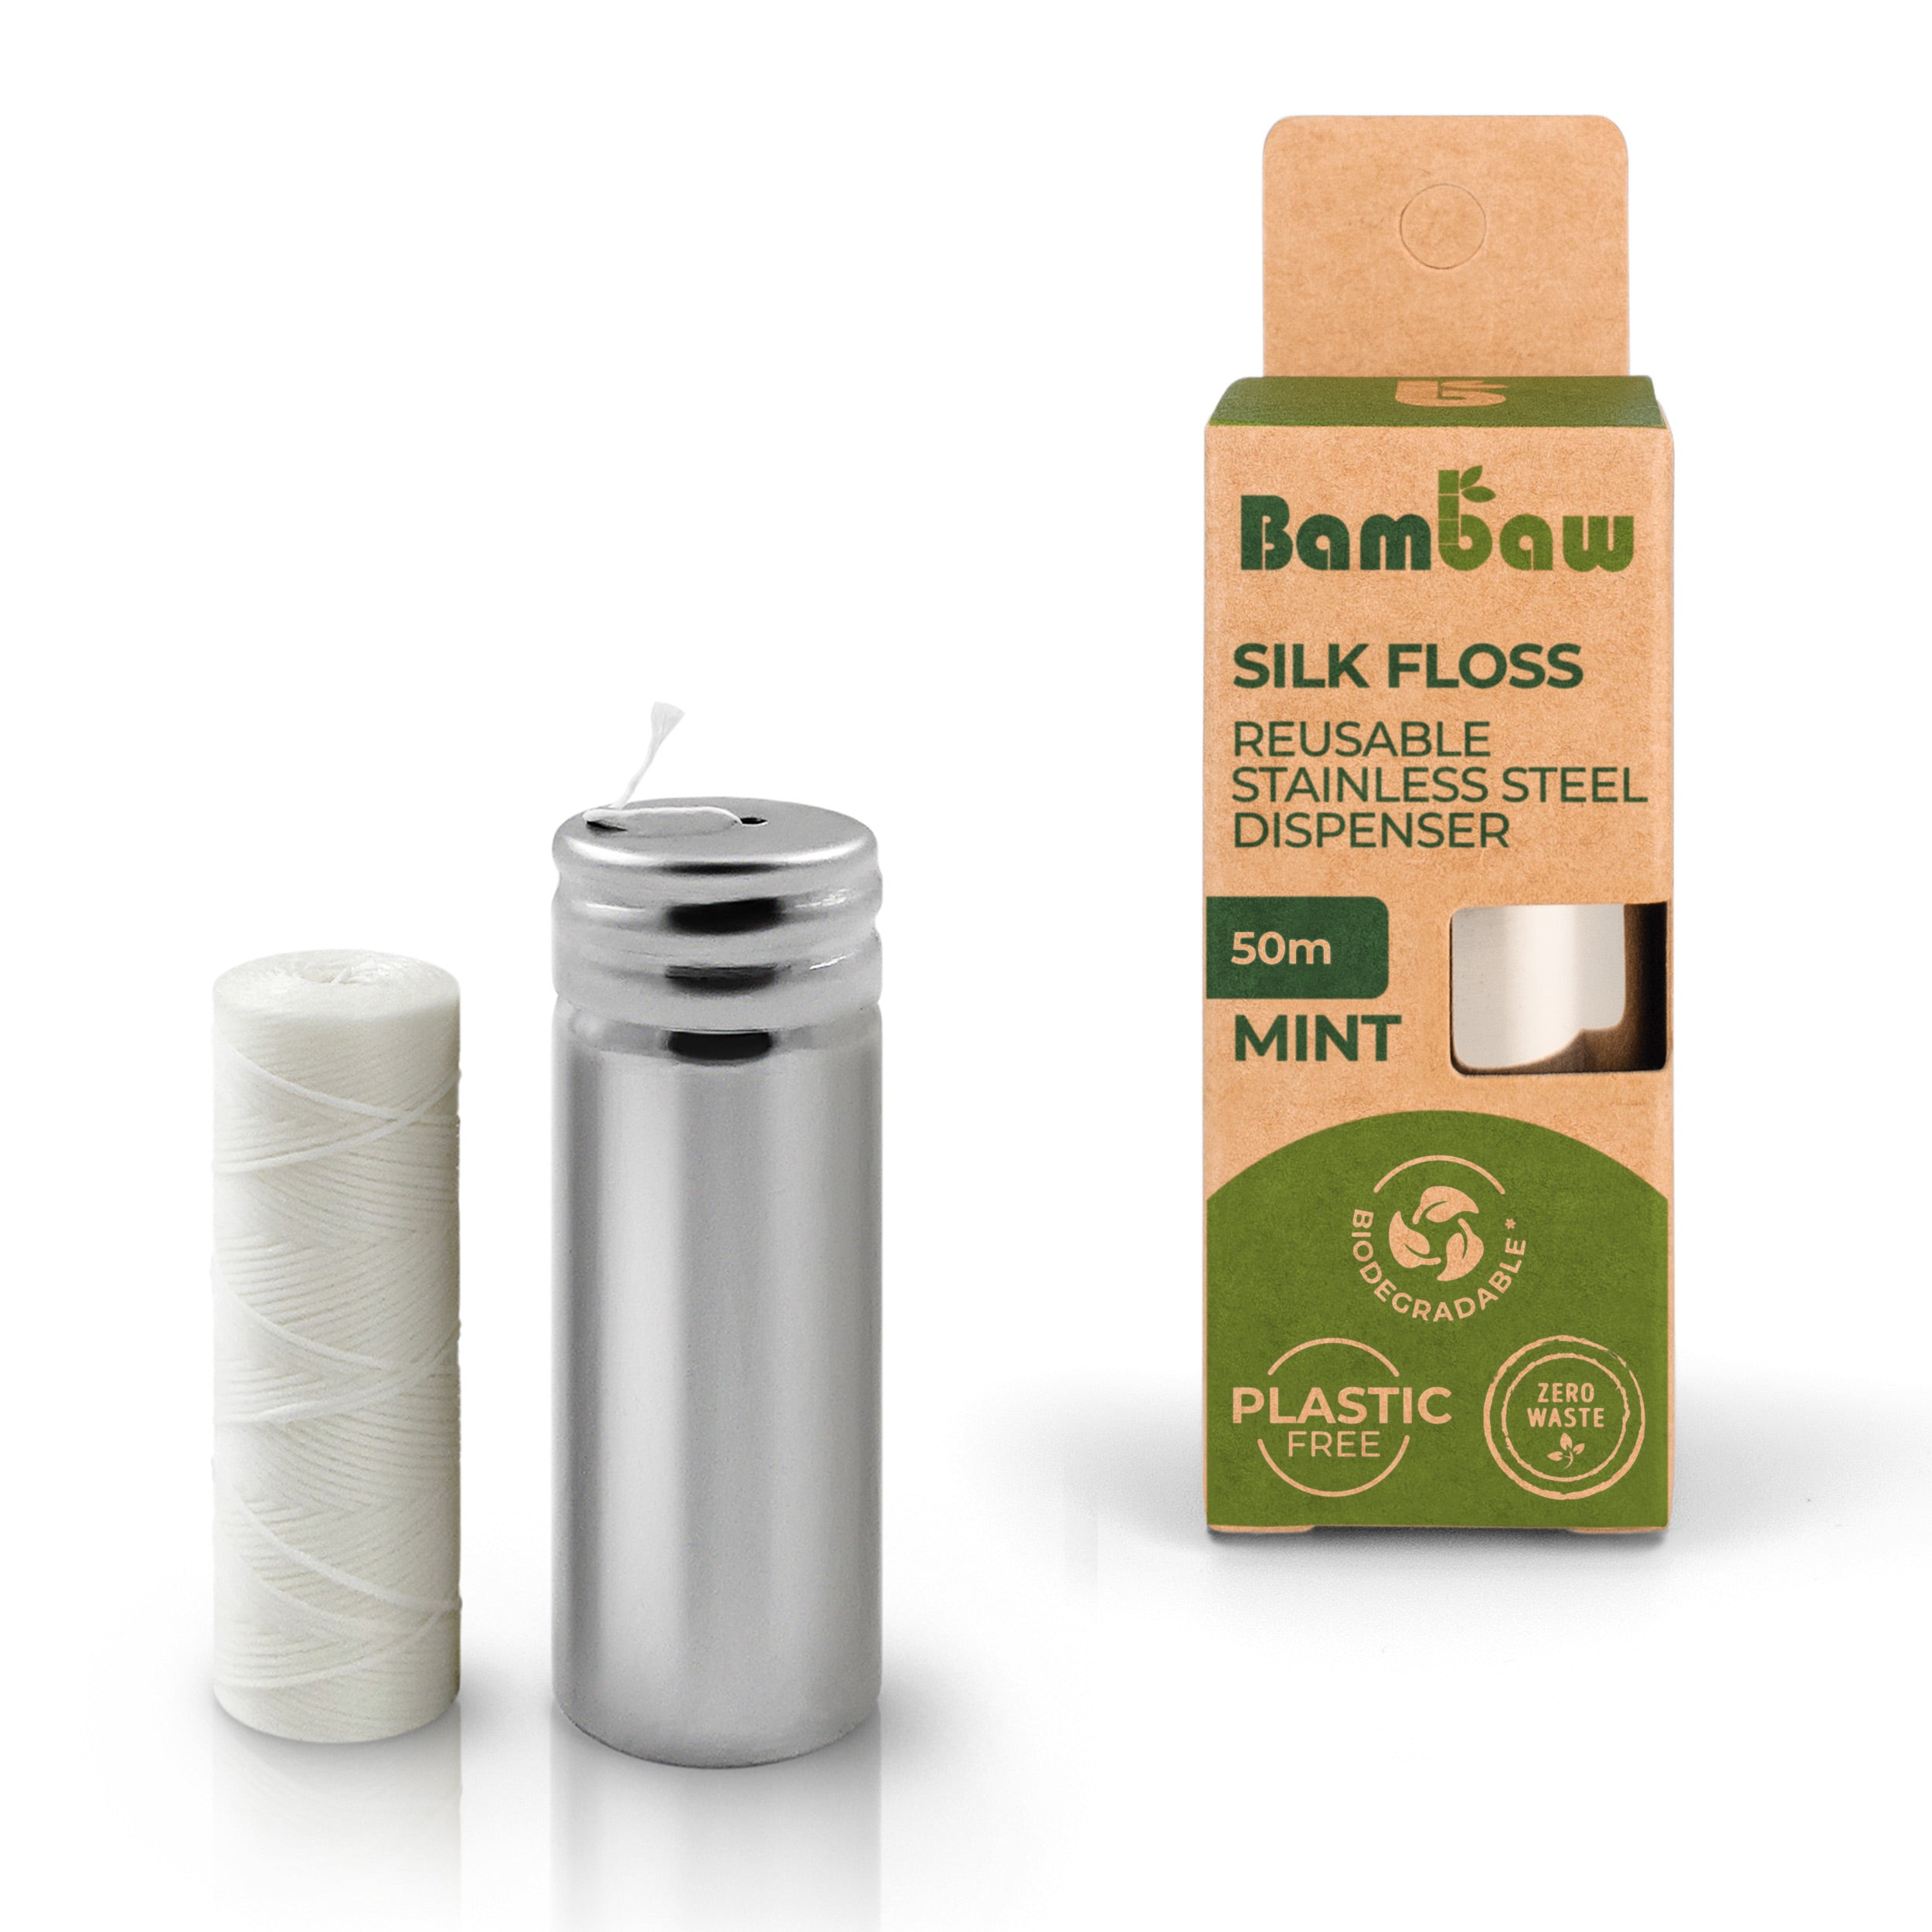 Bambaw silk & reusable stainless-steel floss dispenser - Mint | Bower Collective